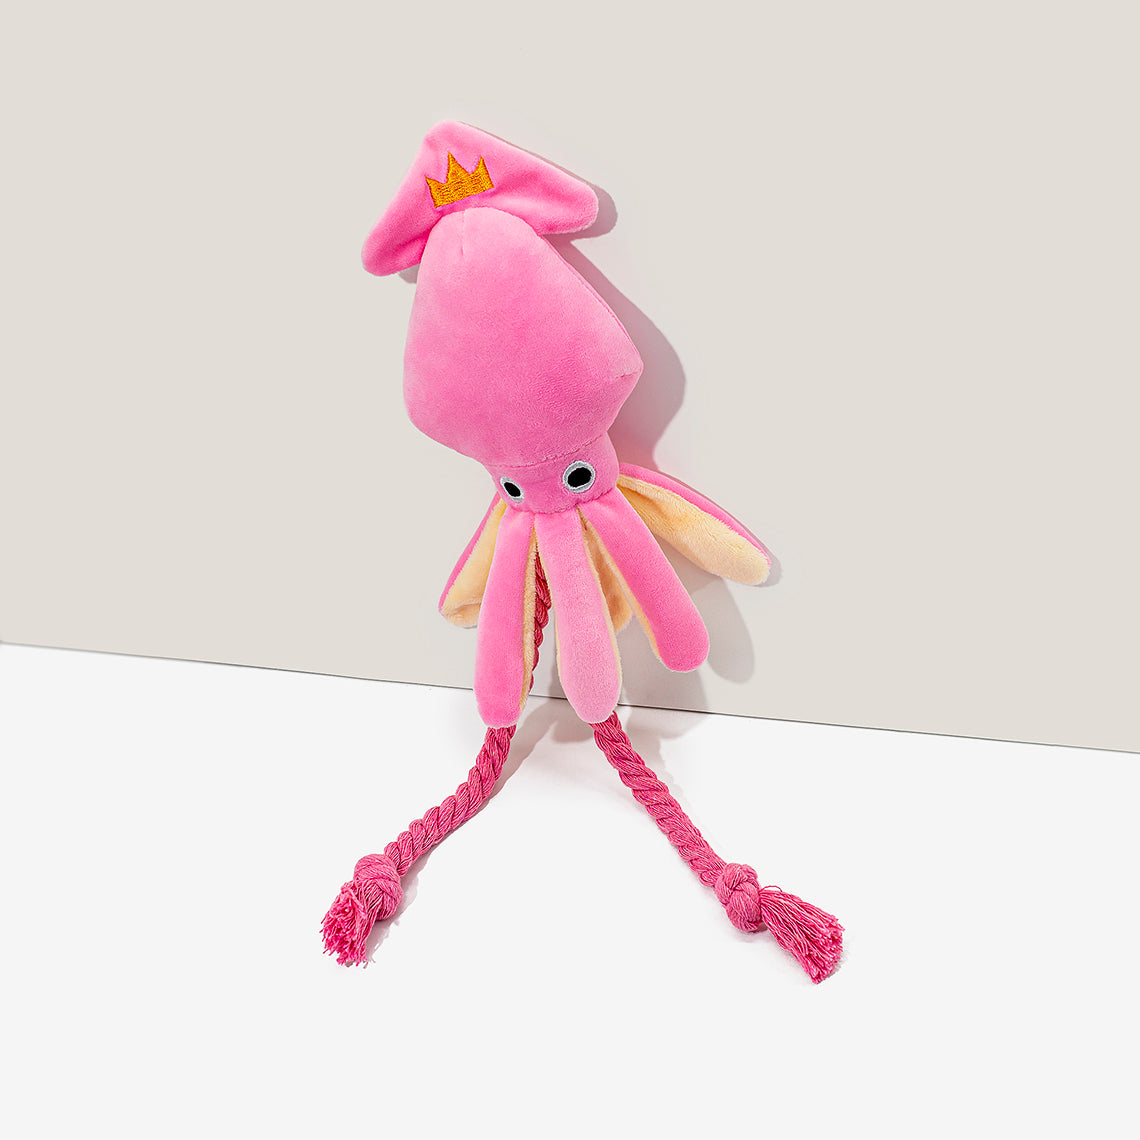 Juguete para perros de peluche chillón de calamar rosa